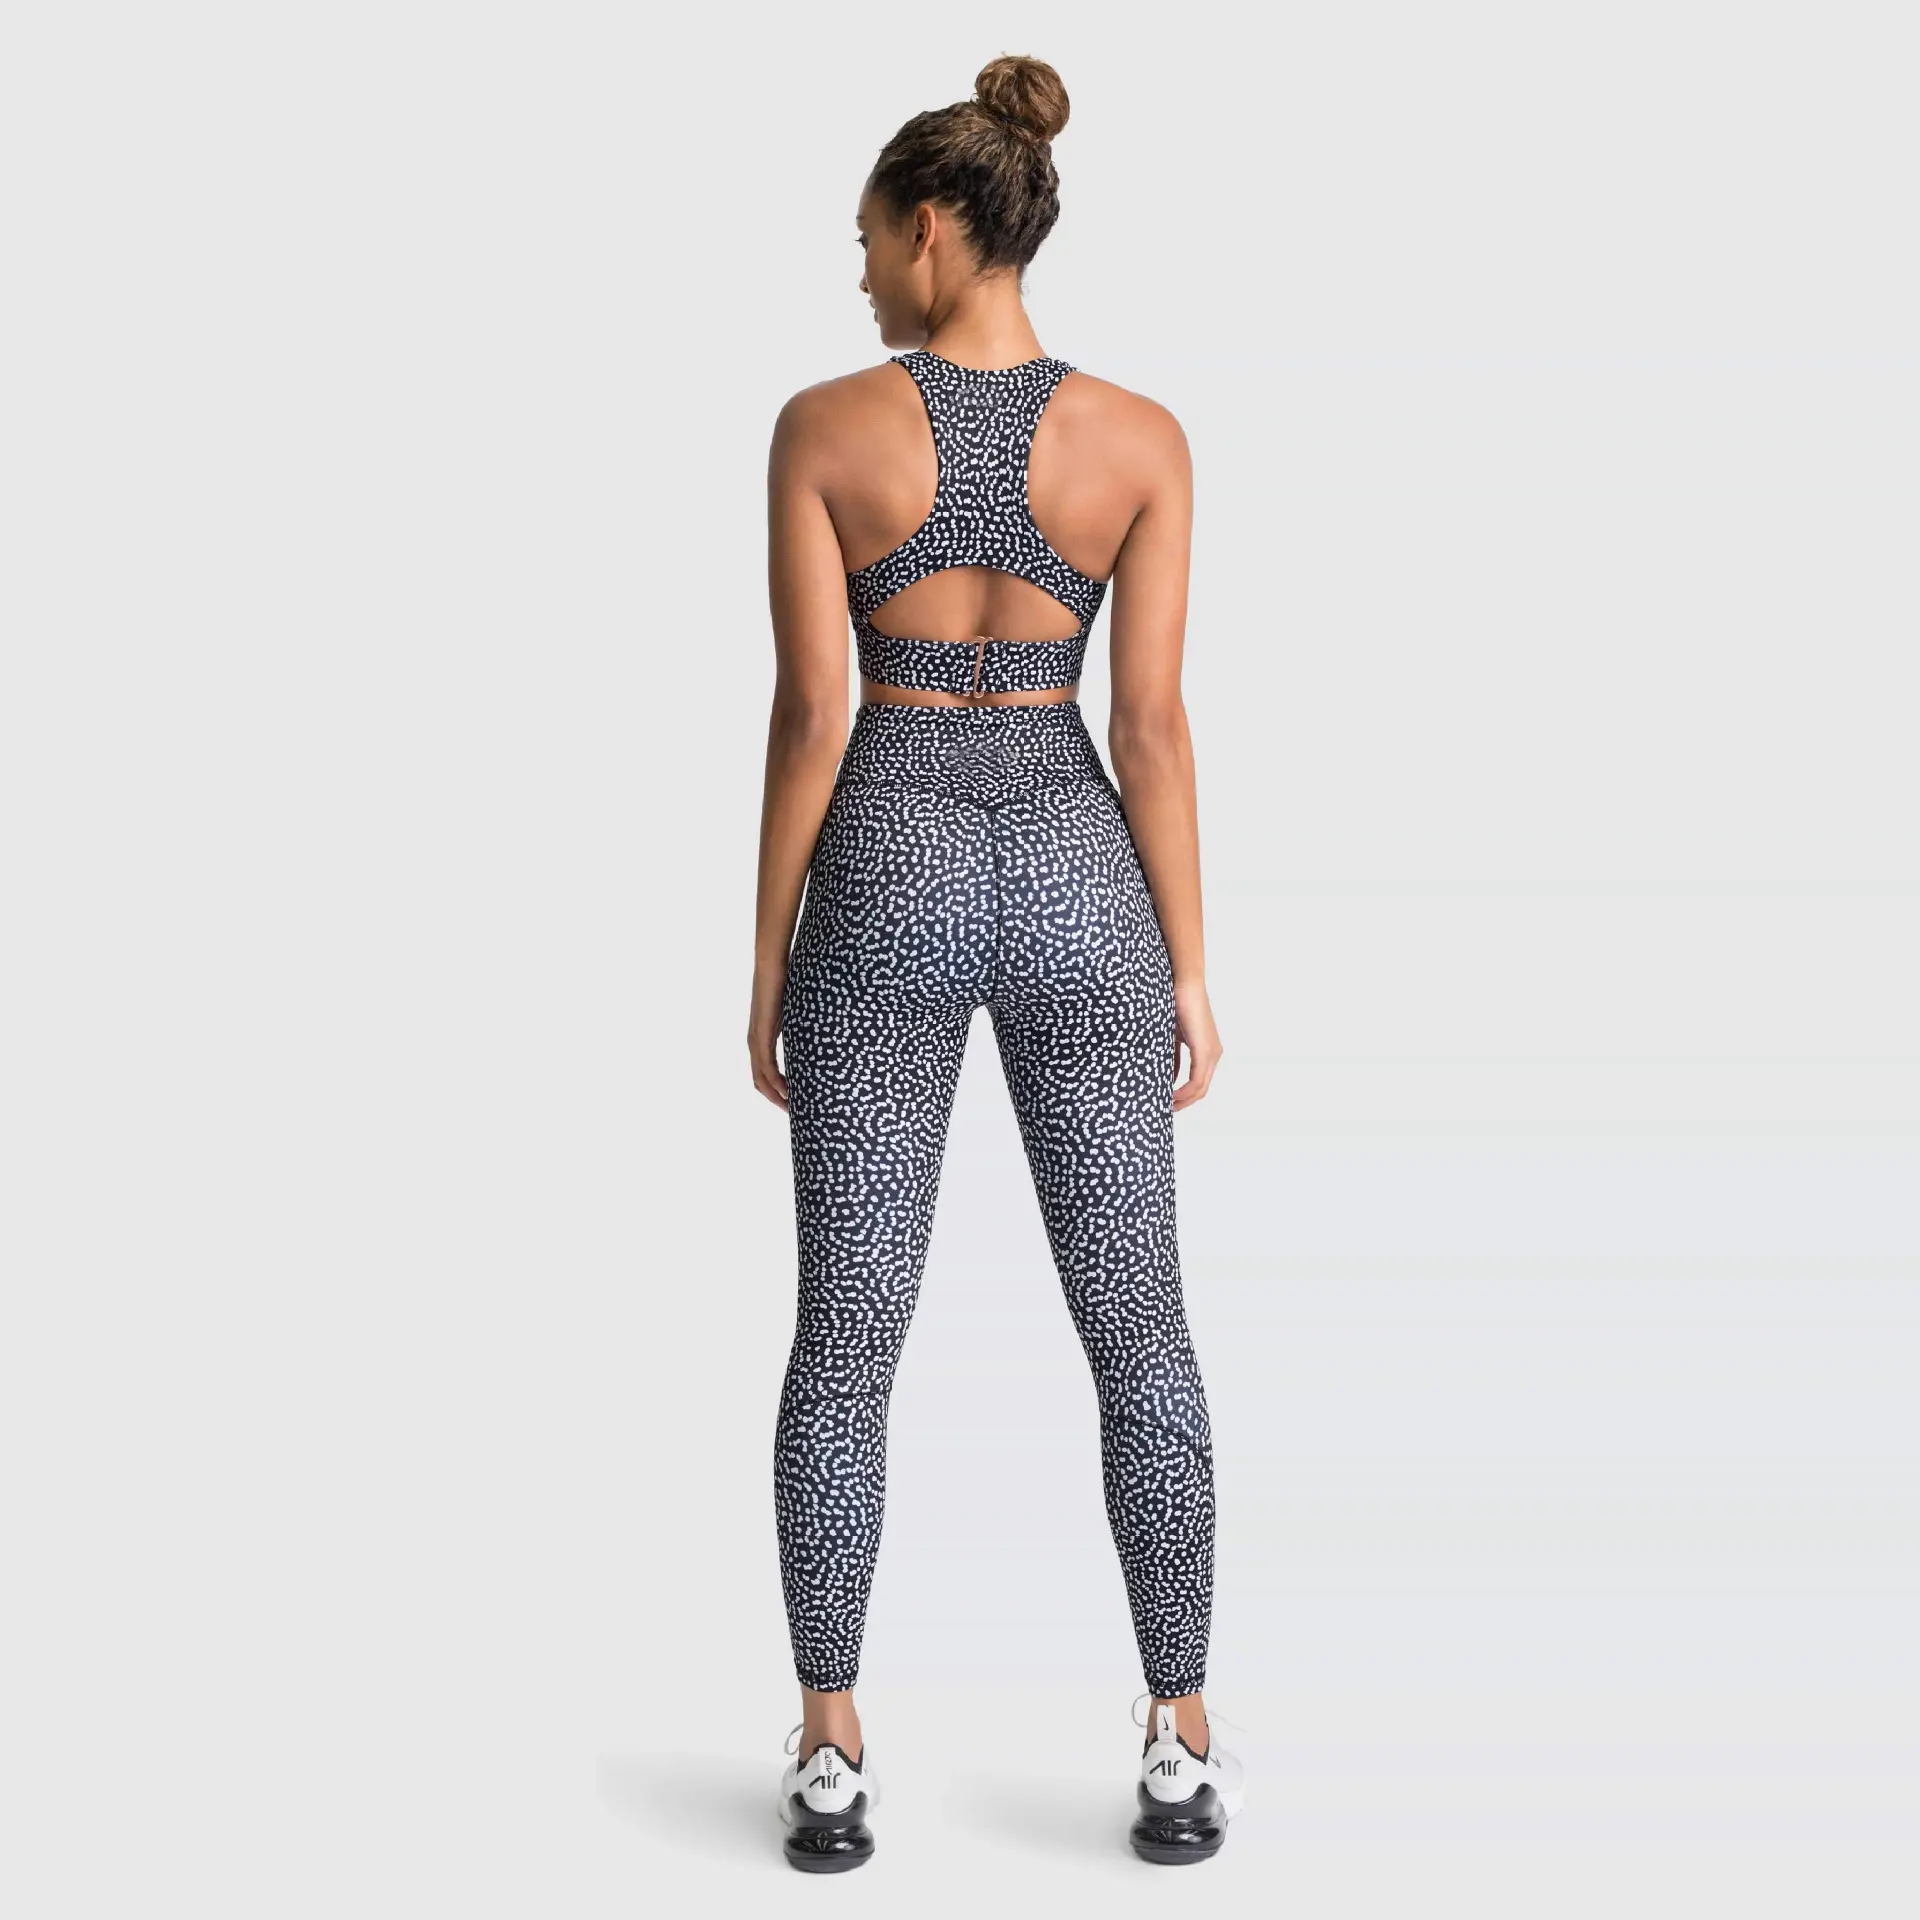 Leopard Print Yoga Set QUICK DRY Breathable Sportswear Plus Size Fitness Yoga Wear Sets